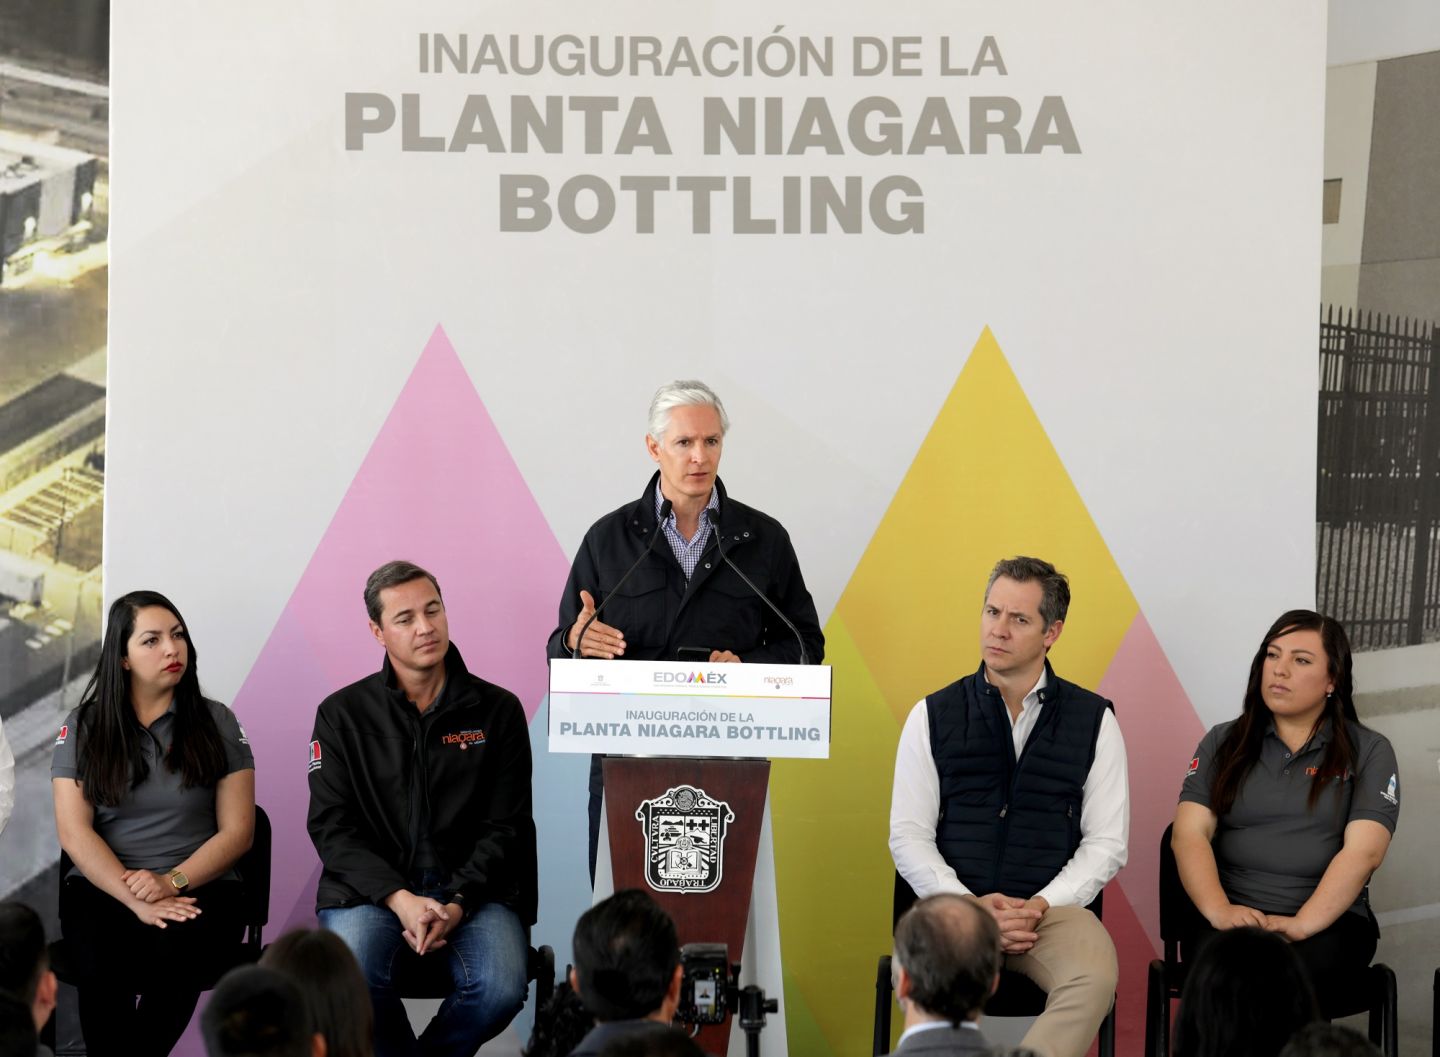 El gobernador mexiquense inauguró importante empresa embotelladora en Soyaniquilpan.
 
